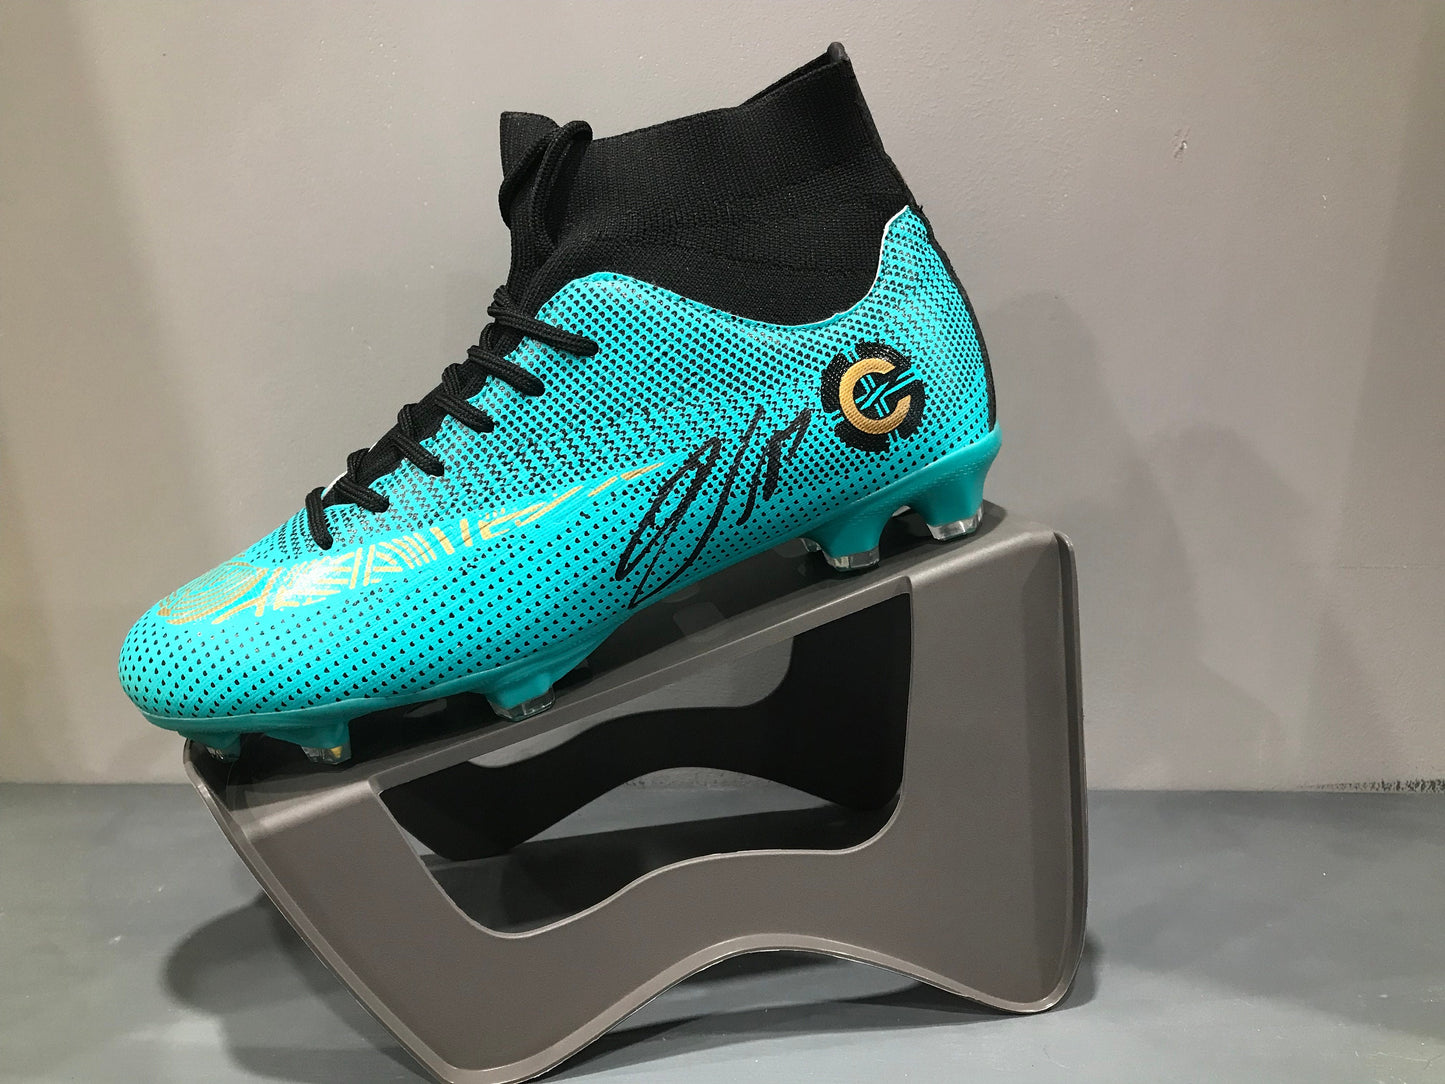 Nicolas Pepe - Arsenal FC - hand signed football boot - AFC memorabilia, gift, christmas gift, autograph